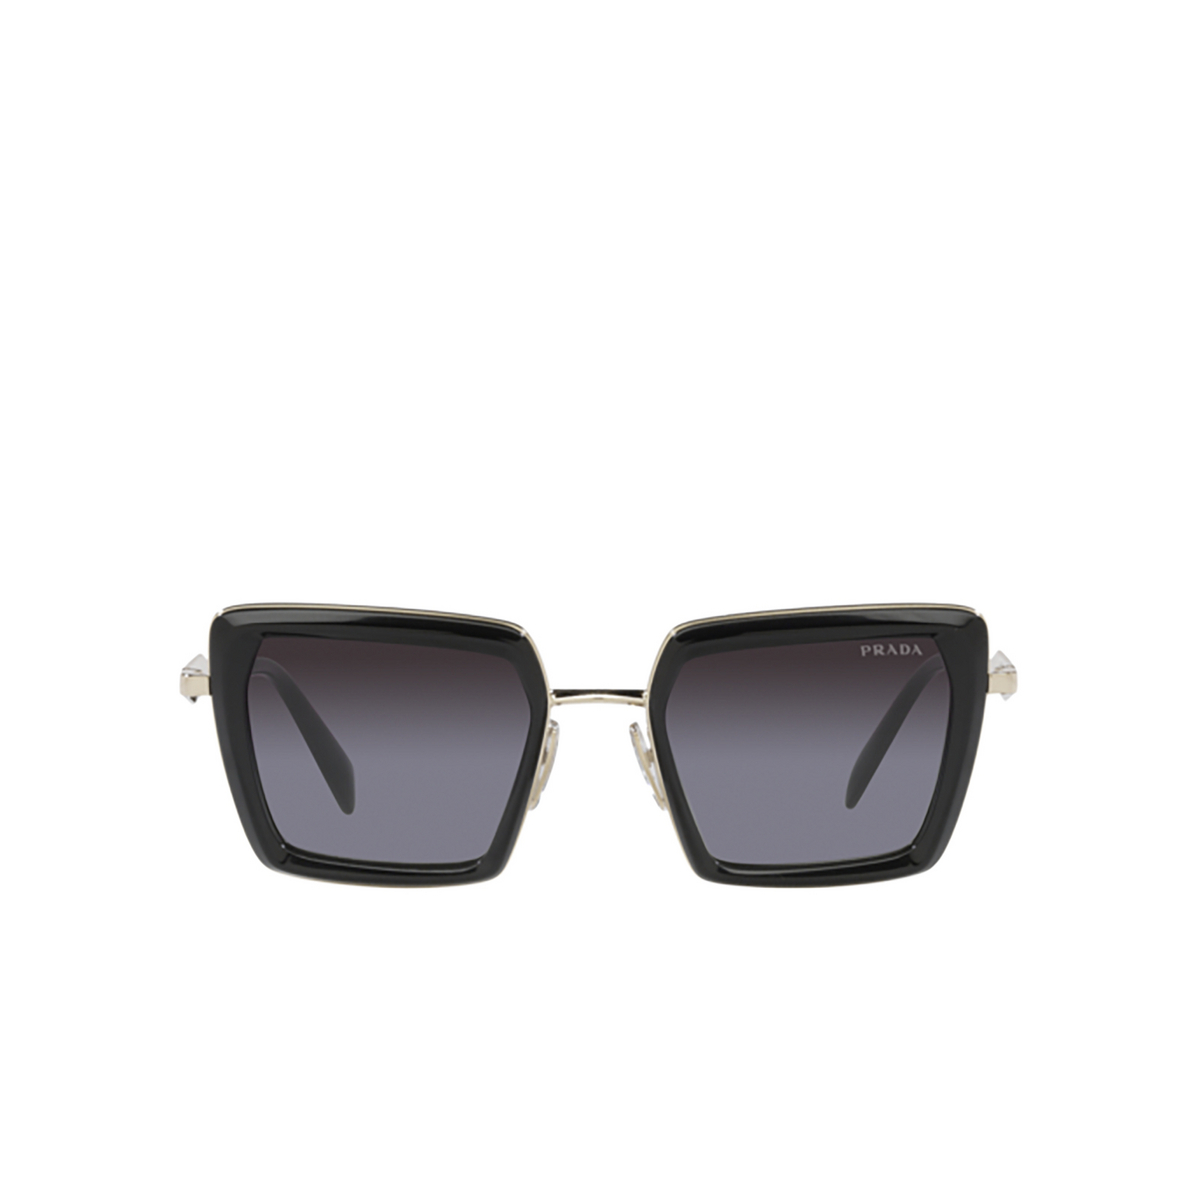 Prada PR 55ZS Sunglasses AAV09S Black / Pale Gold - front view